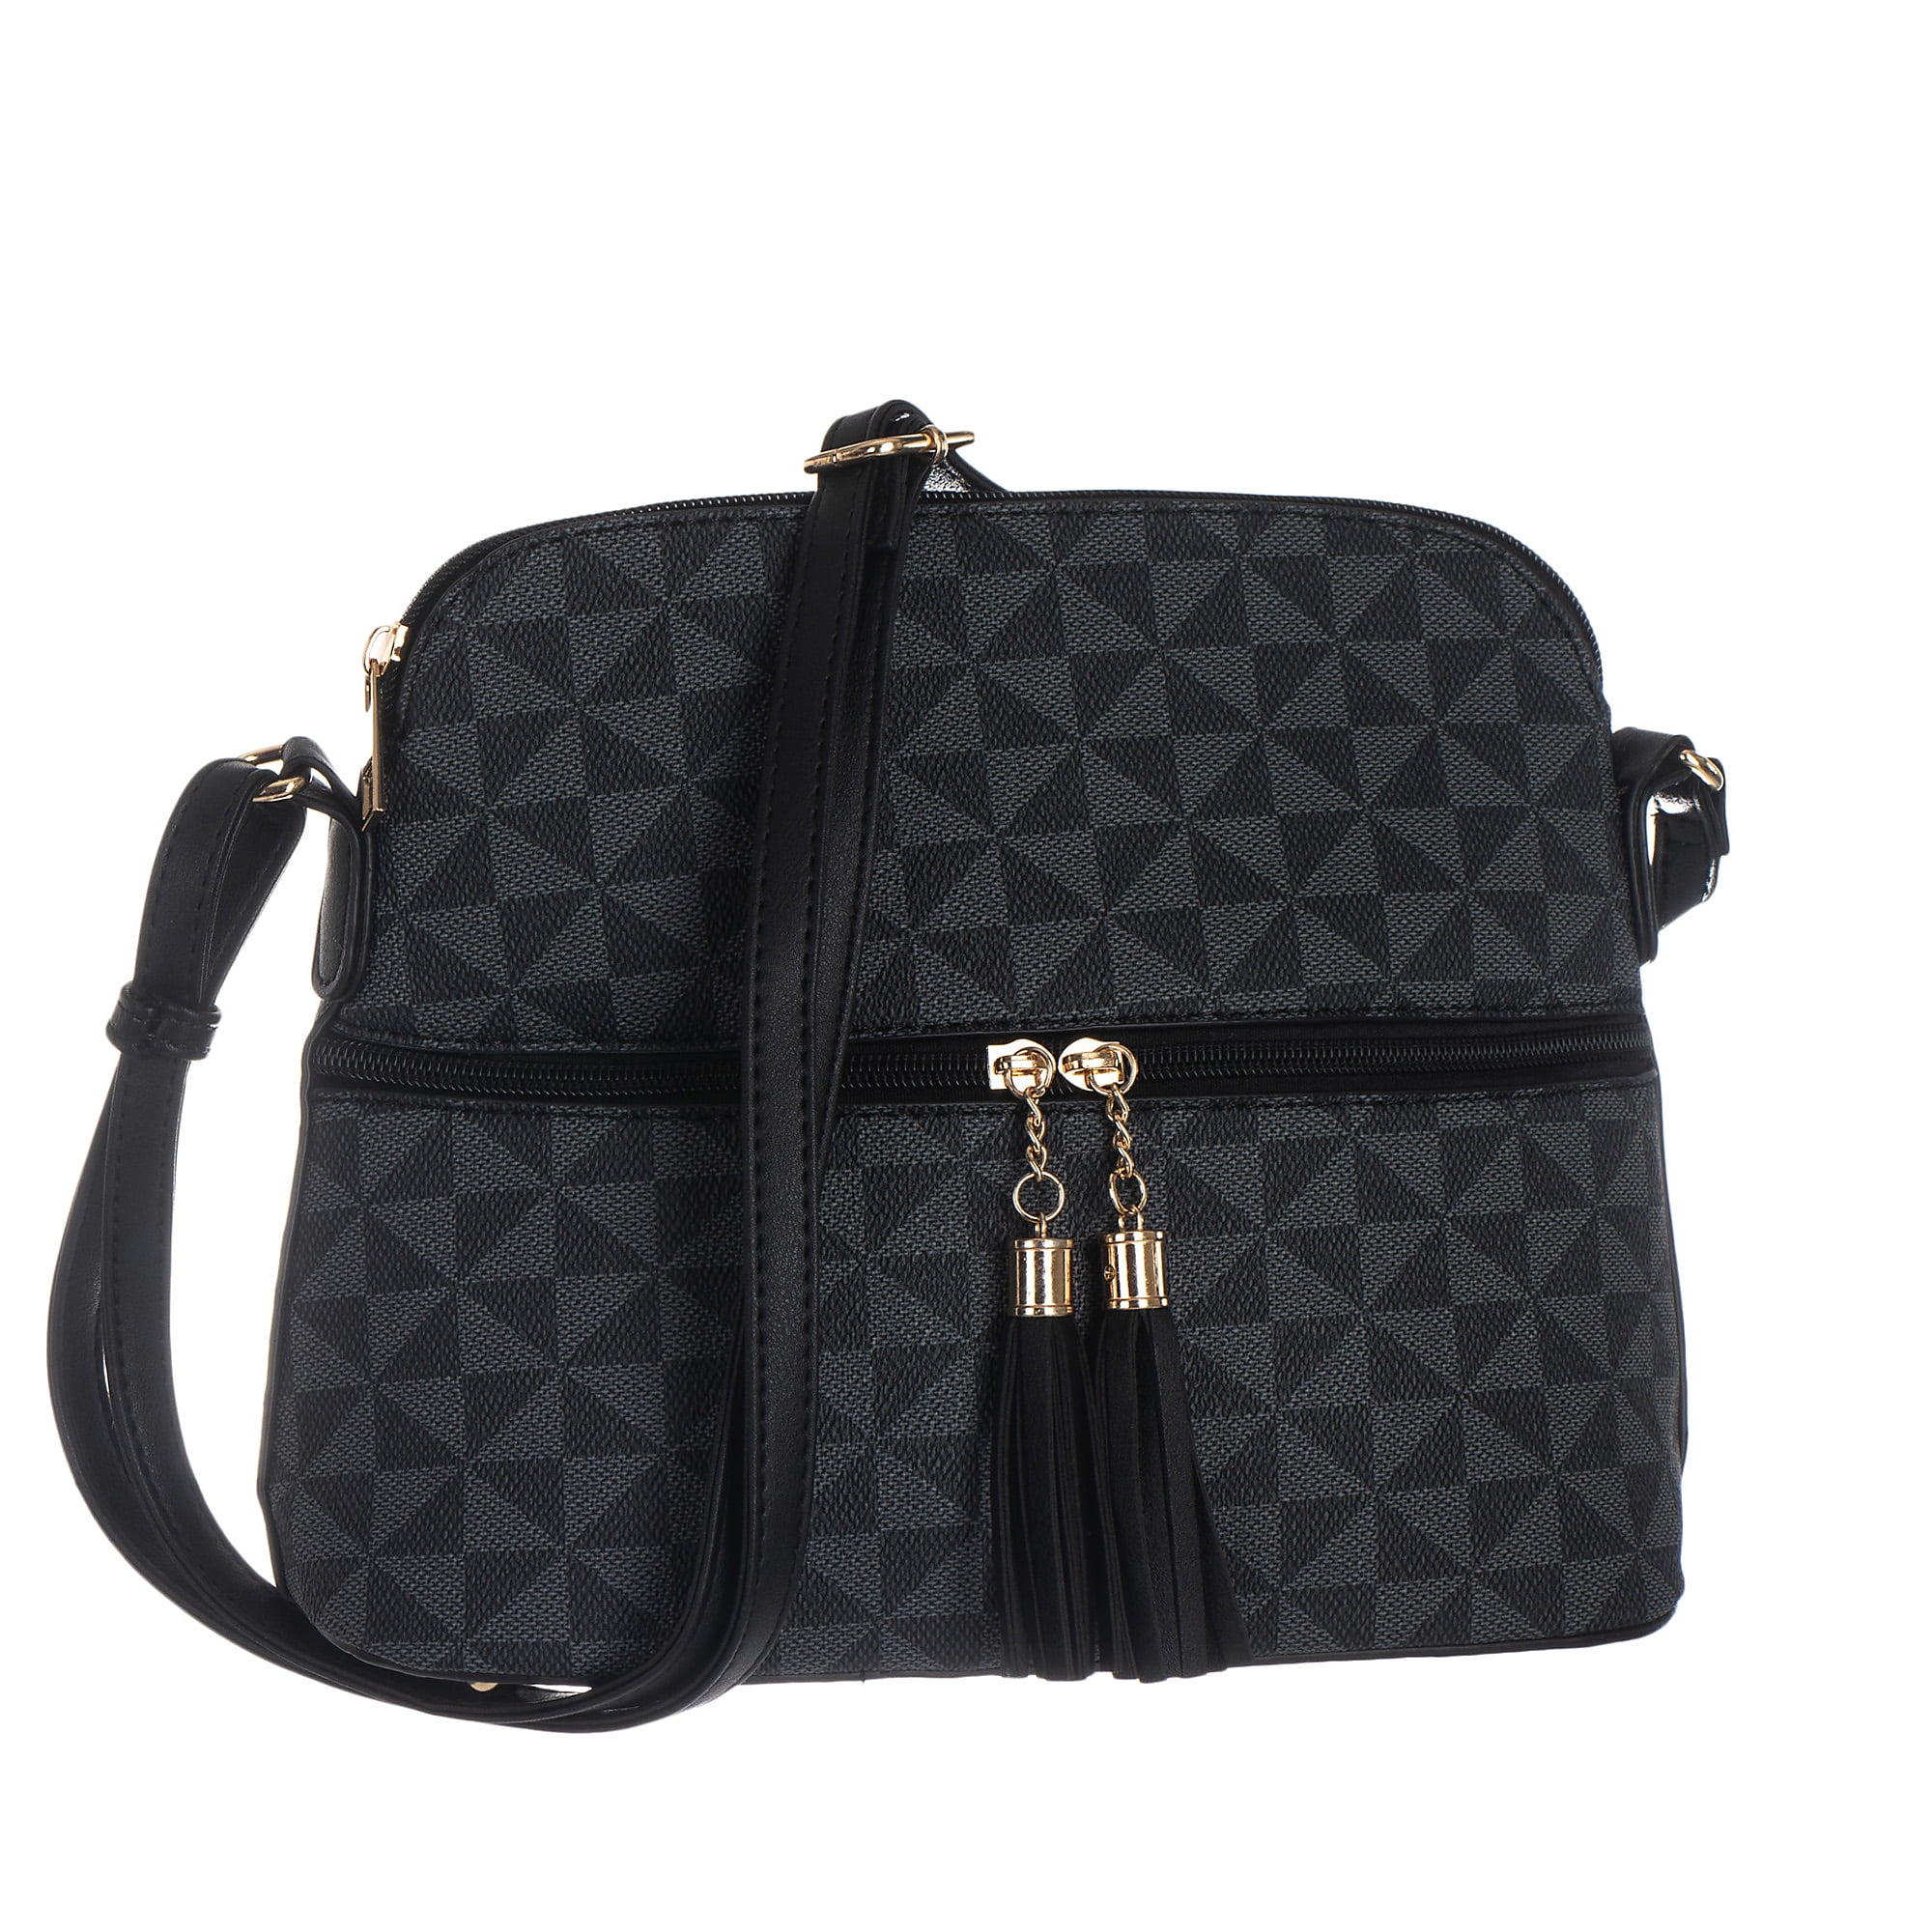 black and white crossbody purse